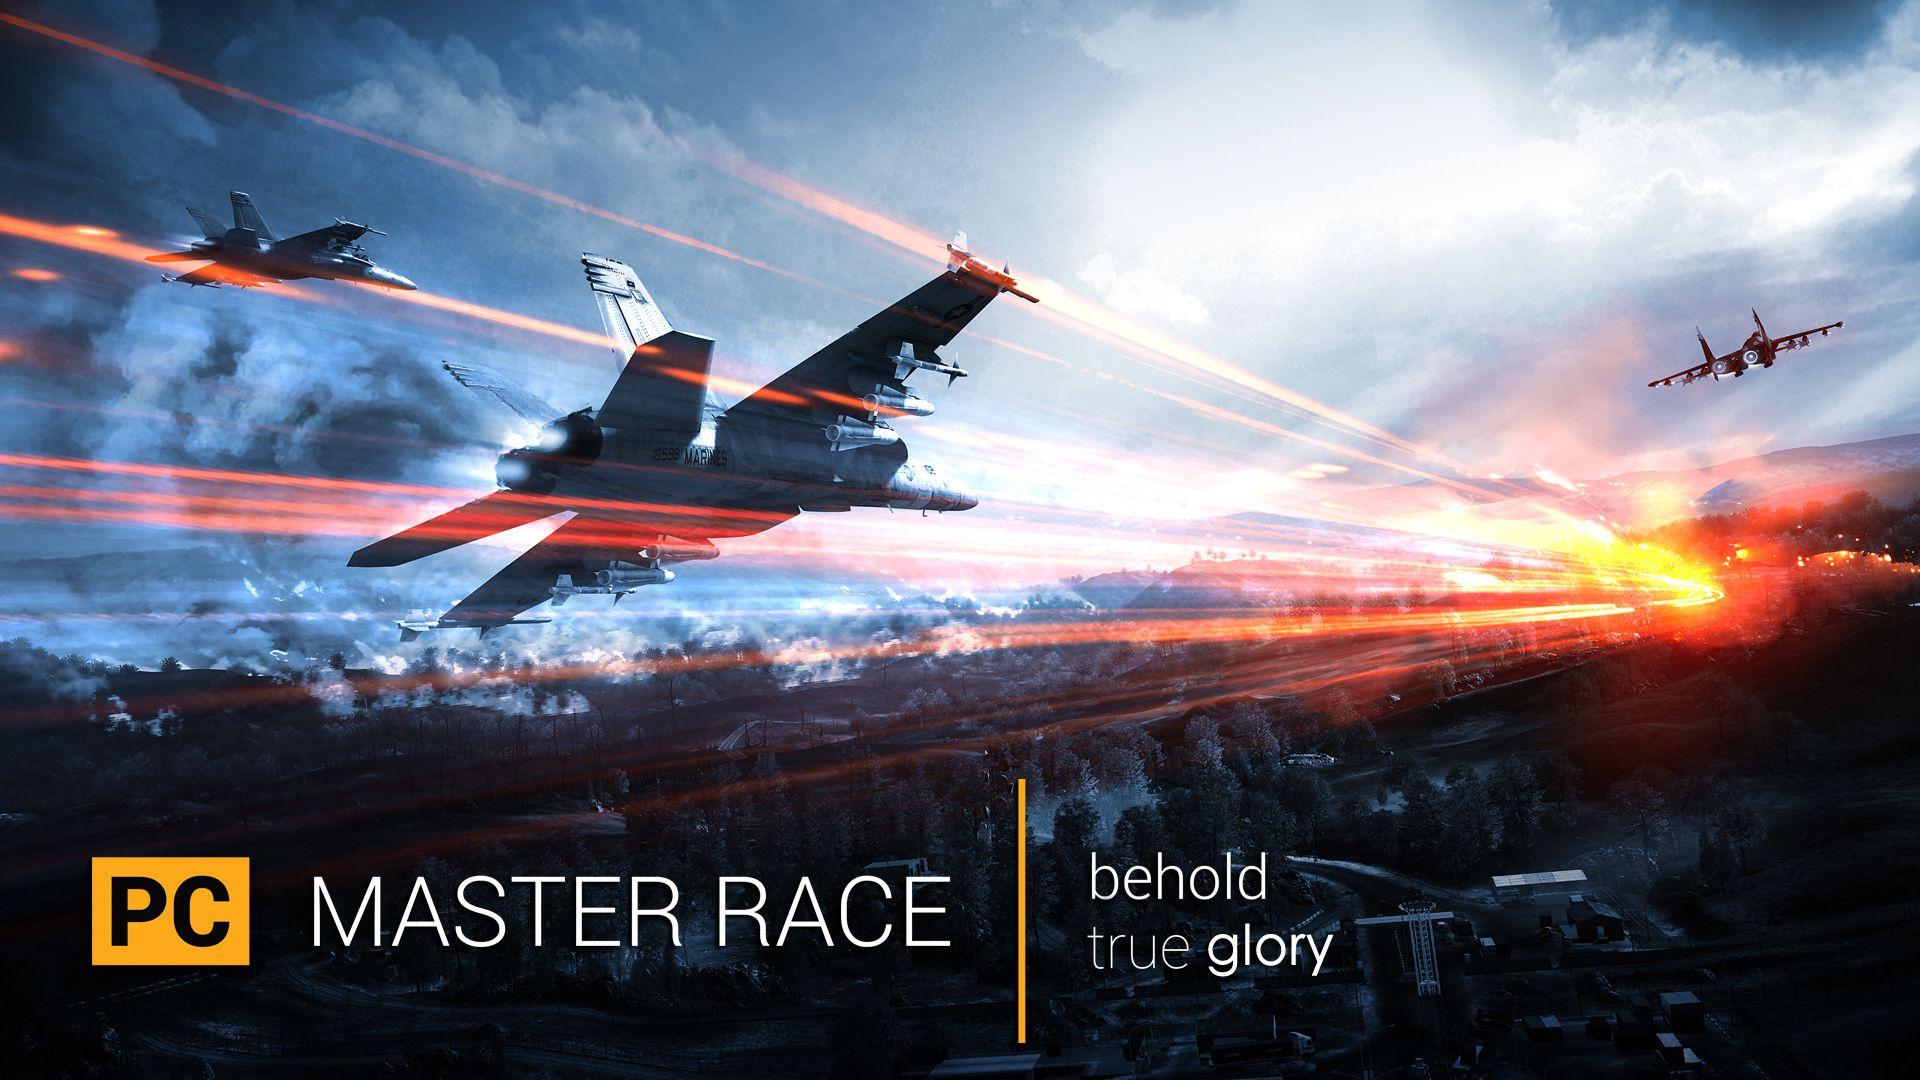 PC Gaming Master Race 4K Wallpaper - post - Imgur